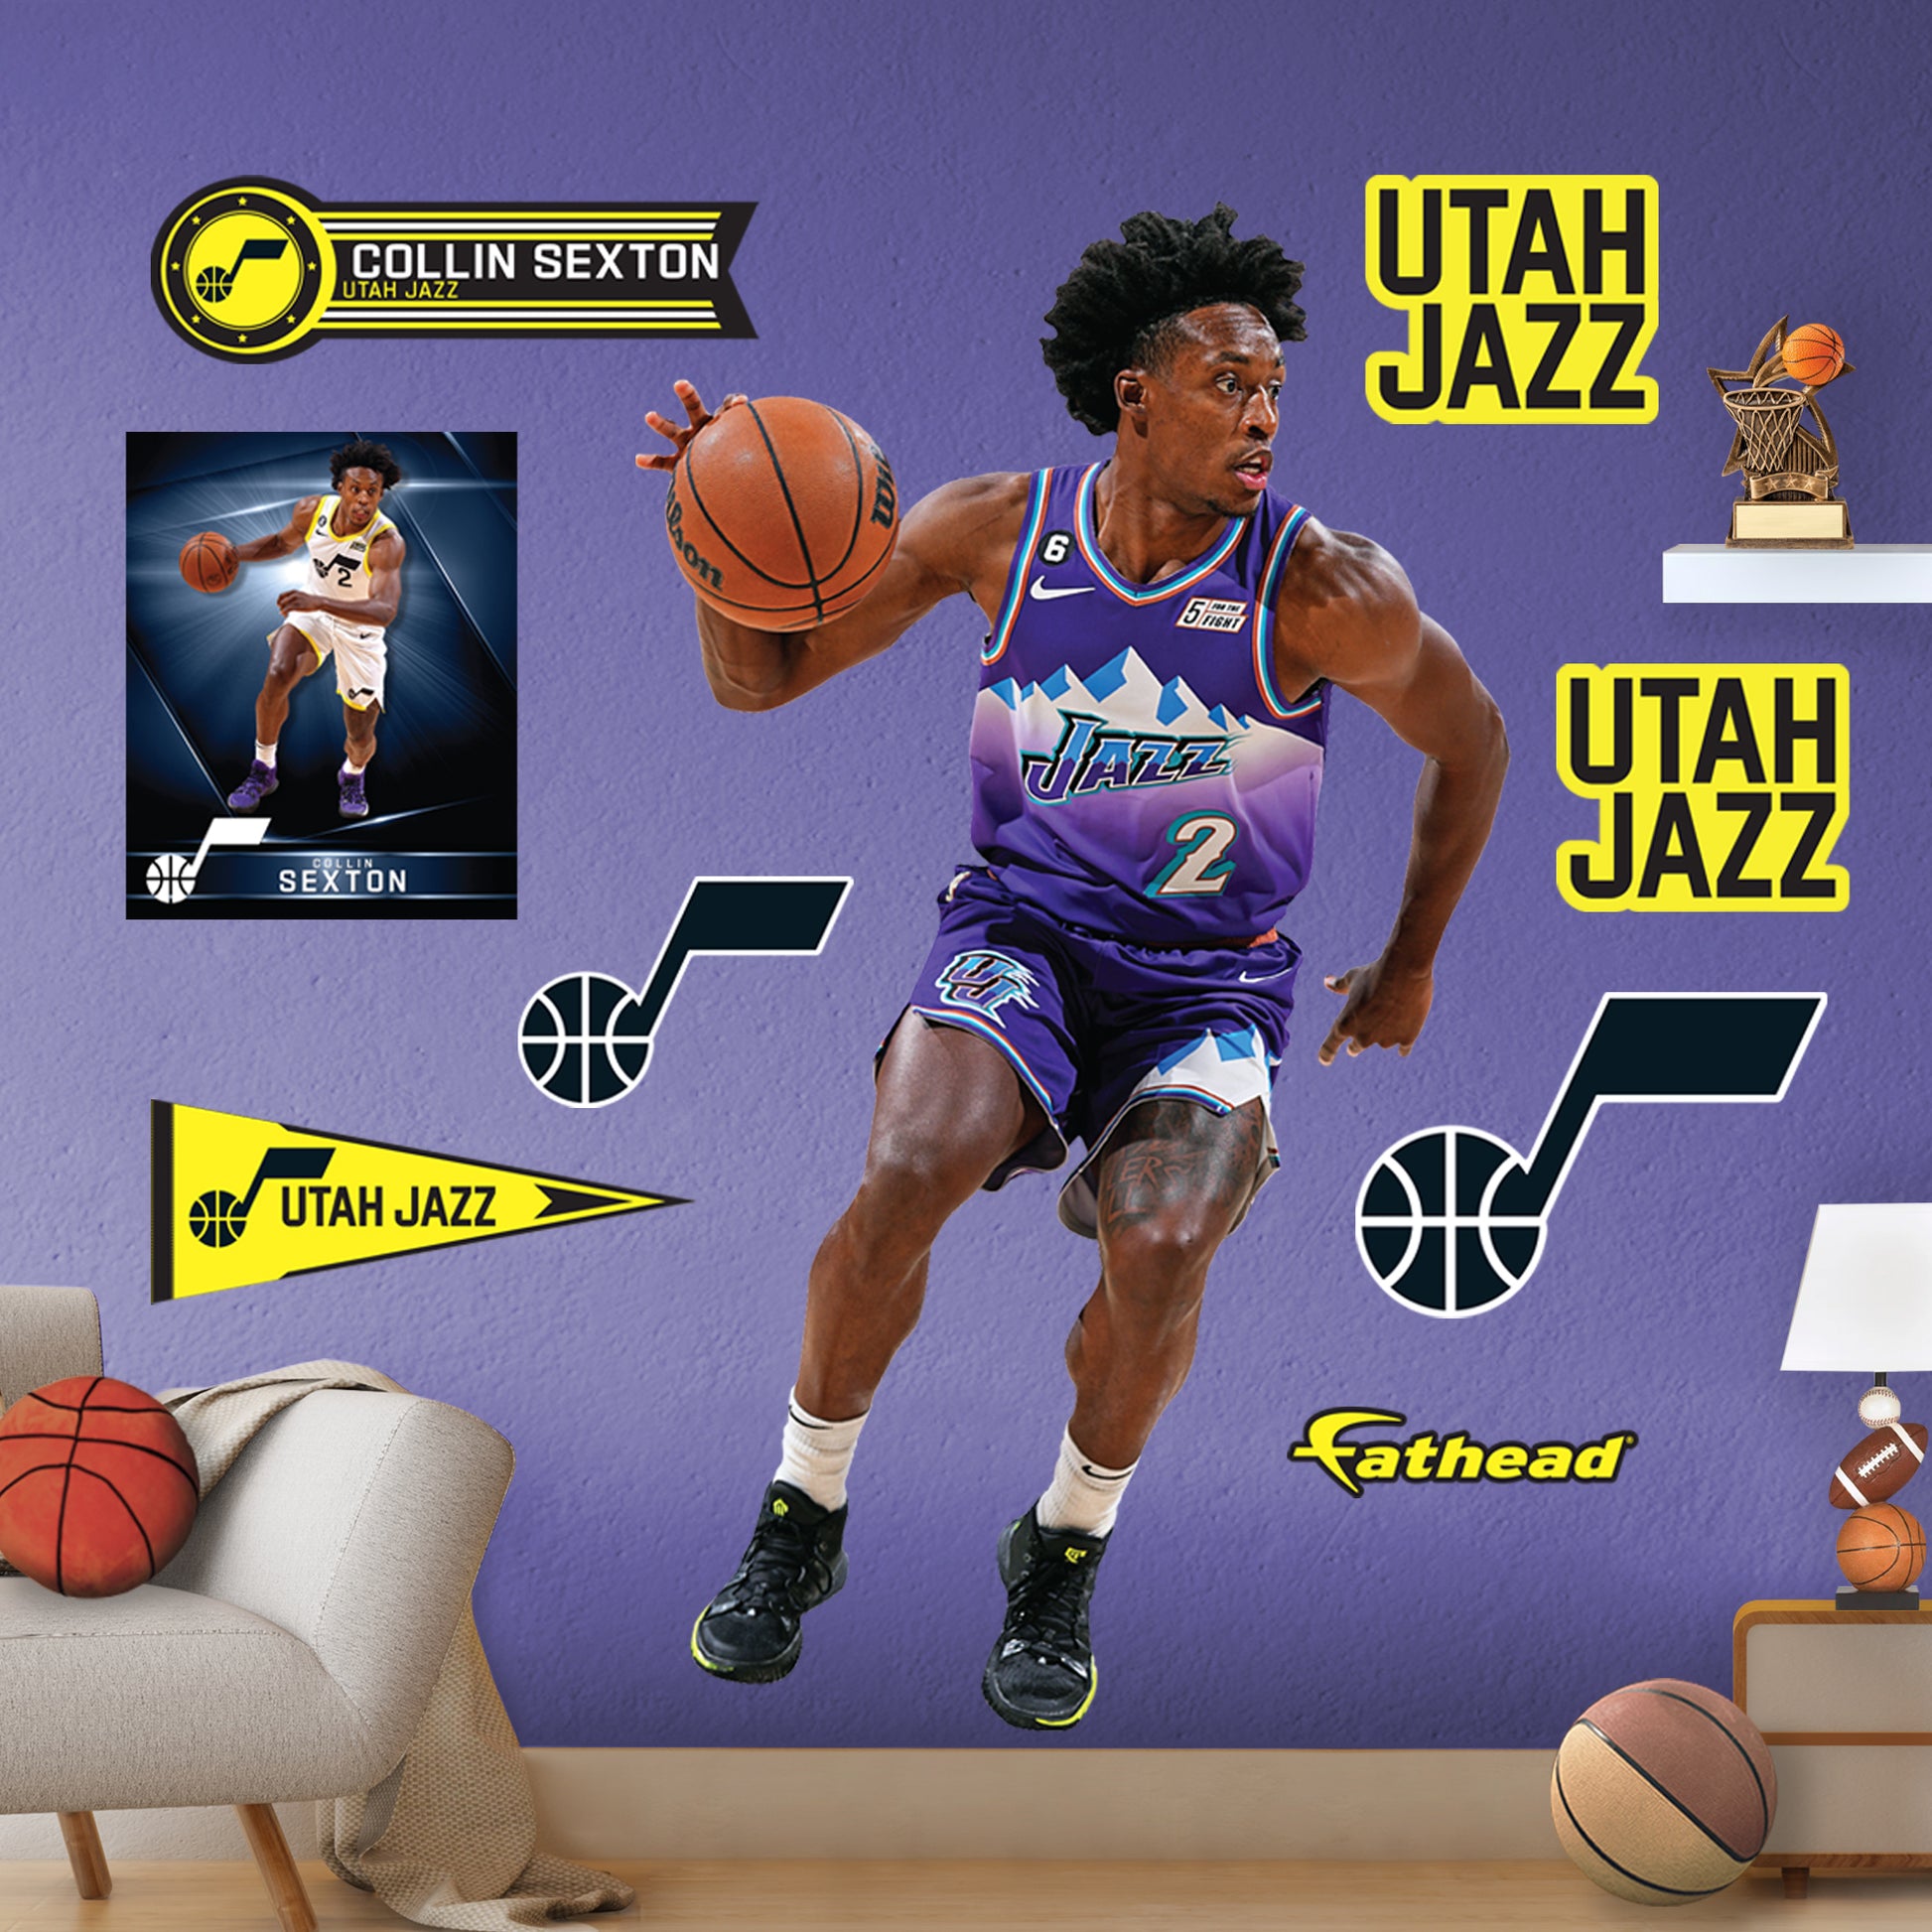 Utah Jazz Apparel, Officially Licensed